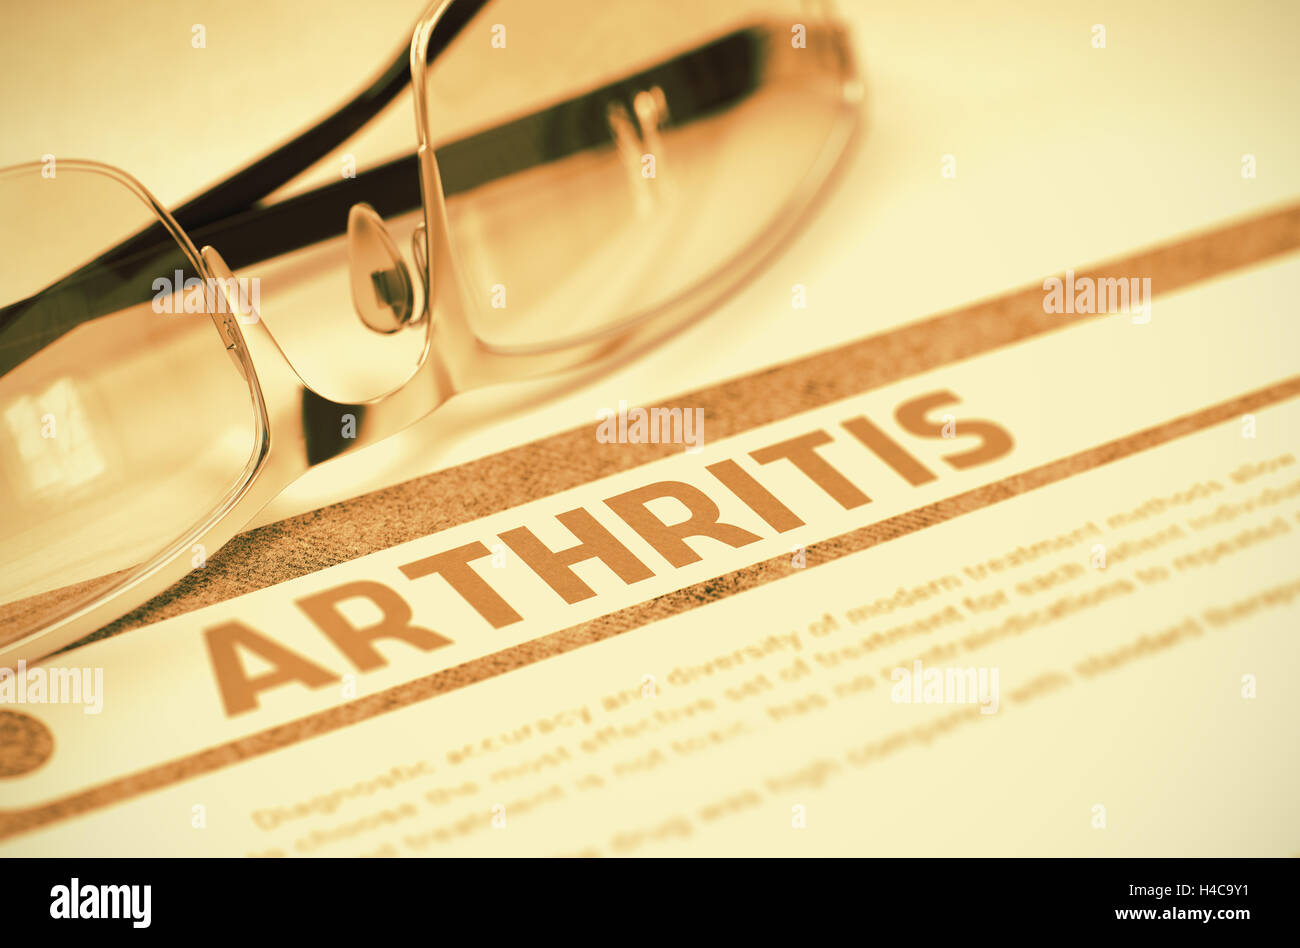 Diagnosis - Arthritis. Medical Concept. 3D Illustration. Stock Photo